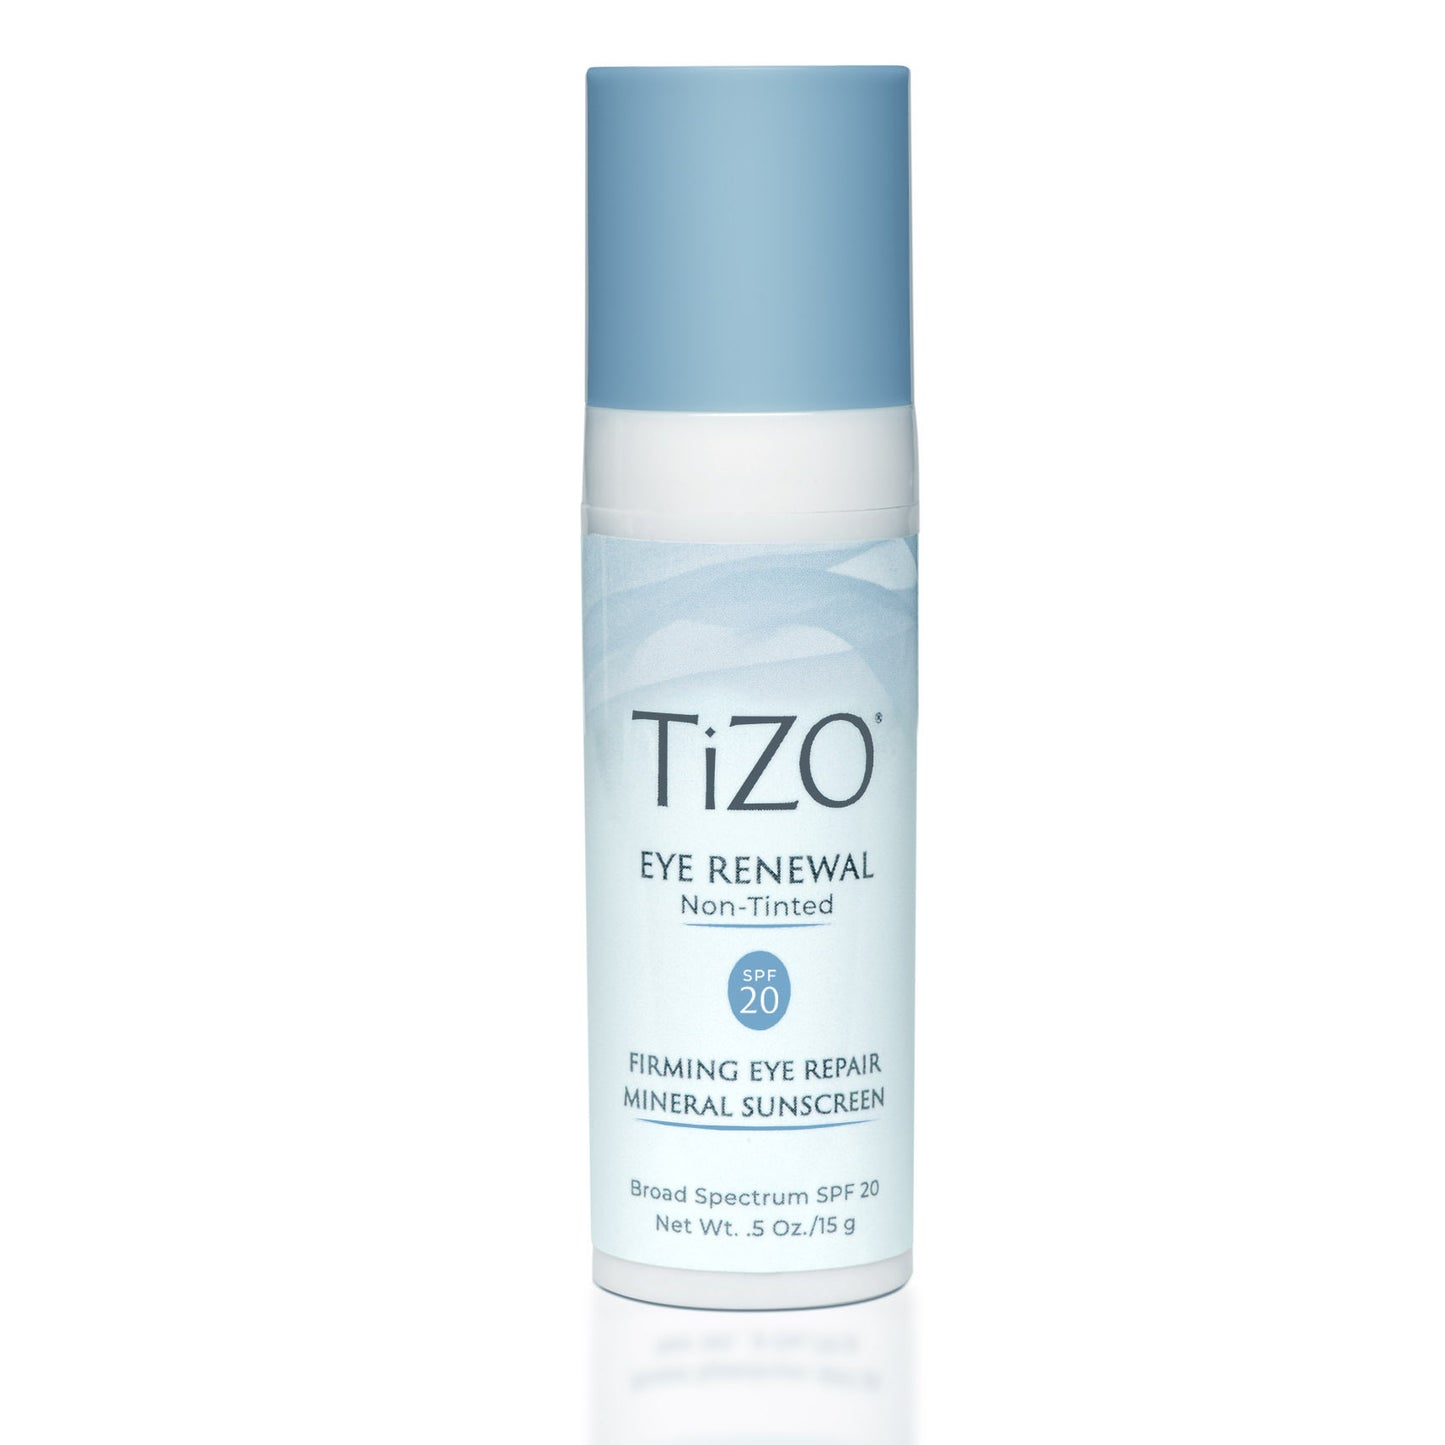 https://sophiescosmetics.com/products/tizo-eye-renewal-non-tinted-sunscreen-5-oz